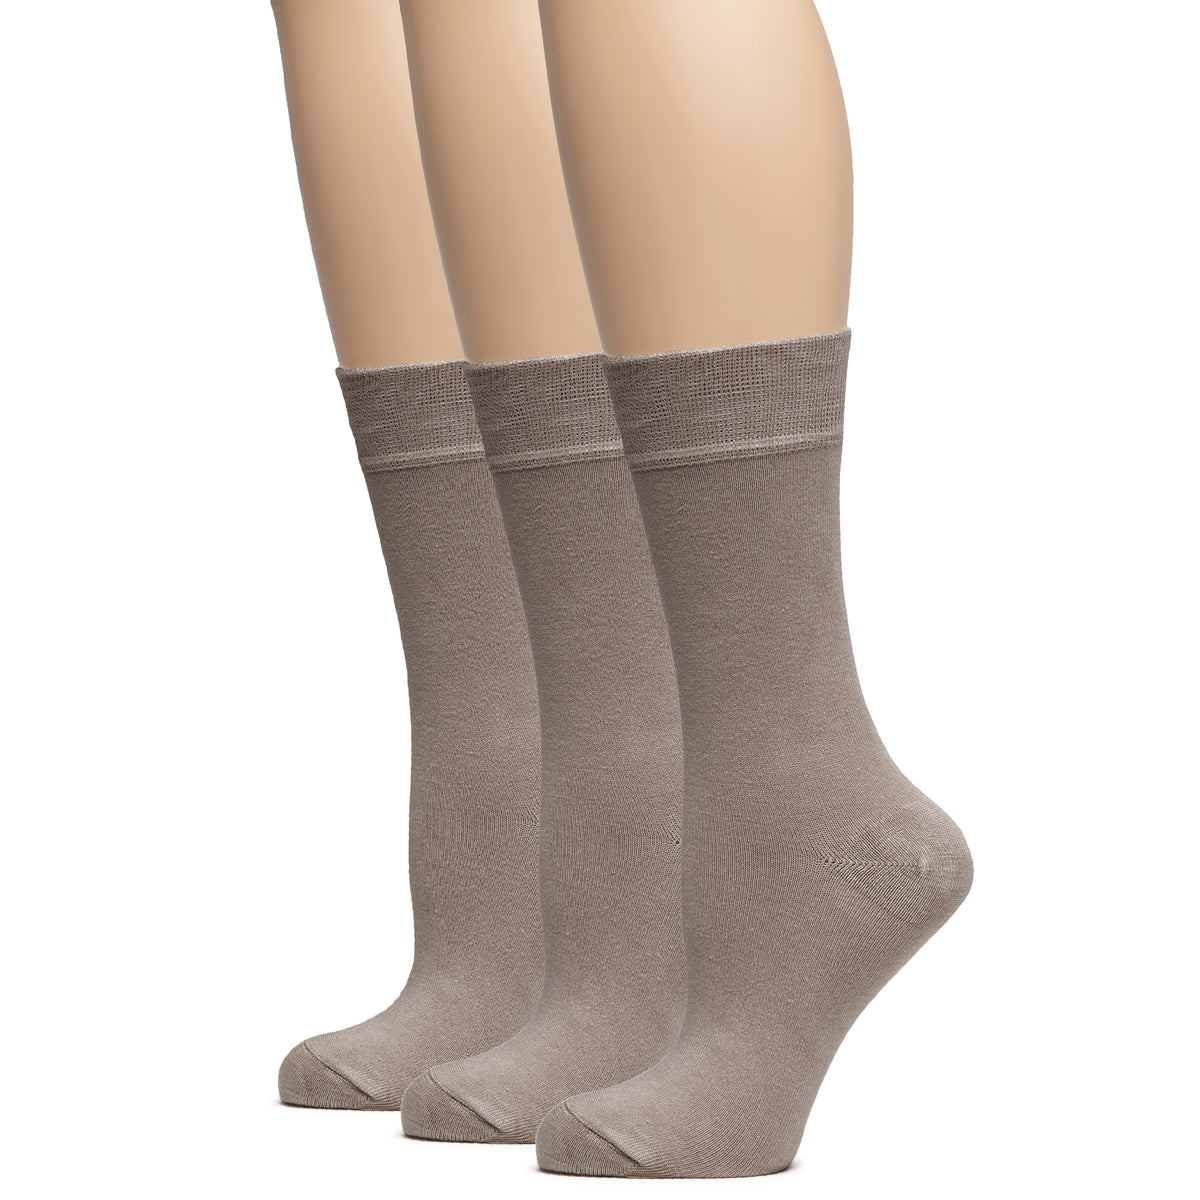 Hugh Ugoli Women's Bamboo Dress Socks Crew Soft Comfy Seamless Toe, 3 Pairs, Shoe Size: 5-8/9-11 | Shoe Size: 9-11 | Dark Beige